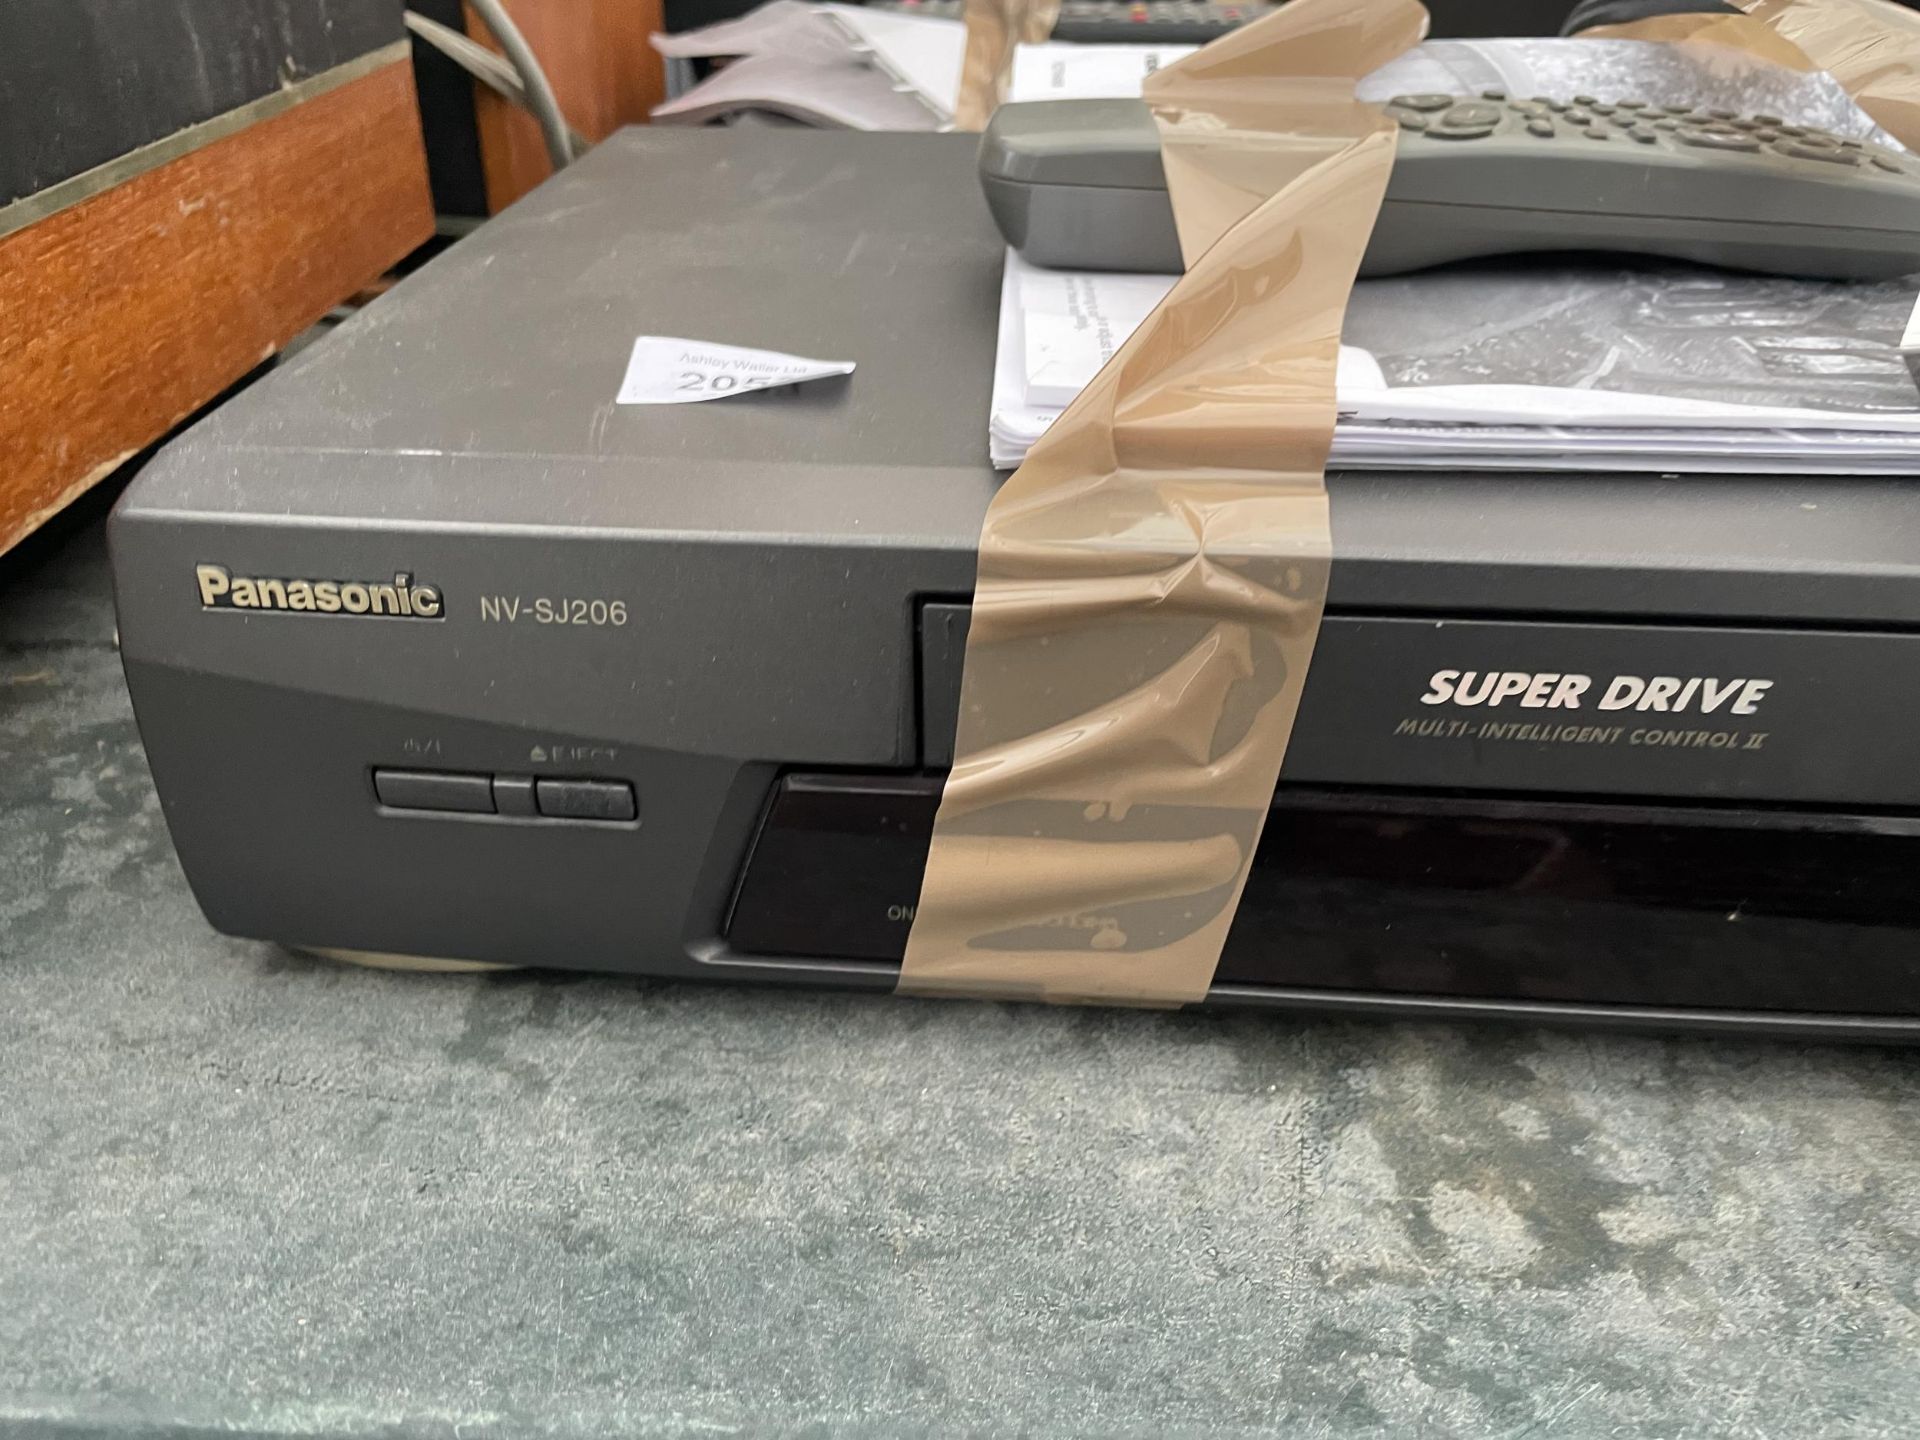 A PANASONIC VHS PLAYER AND A TOSHIBA DVD PLAYER - Image 2 of 3